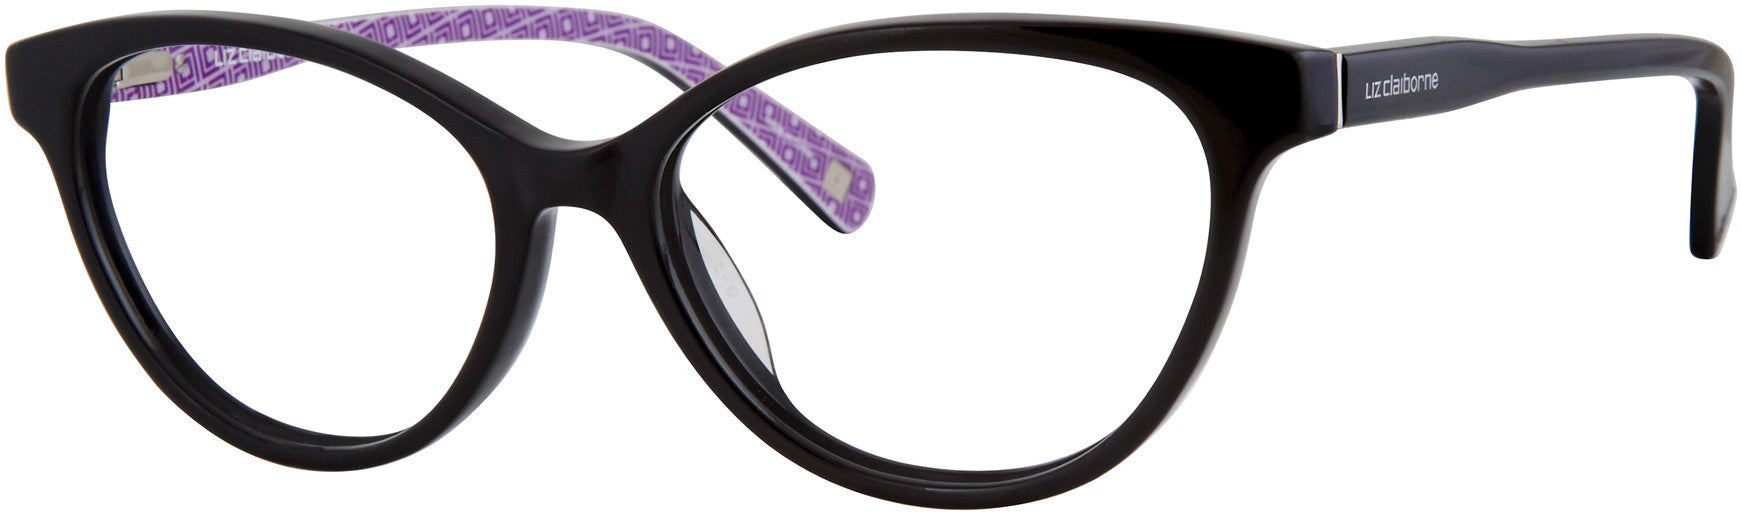  Liz Claiborne 452 Cat Eye/butterfly Eyeglasses 0807-0807  Black (00 Demo Lens)